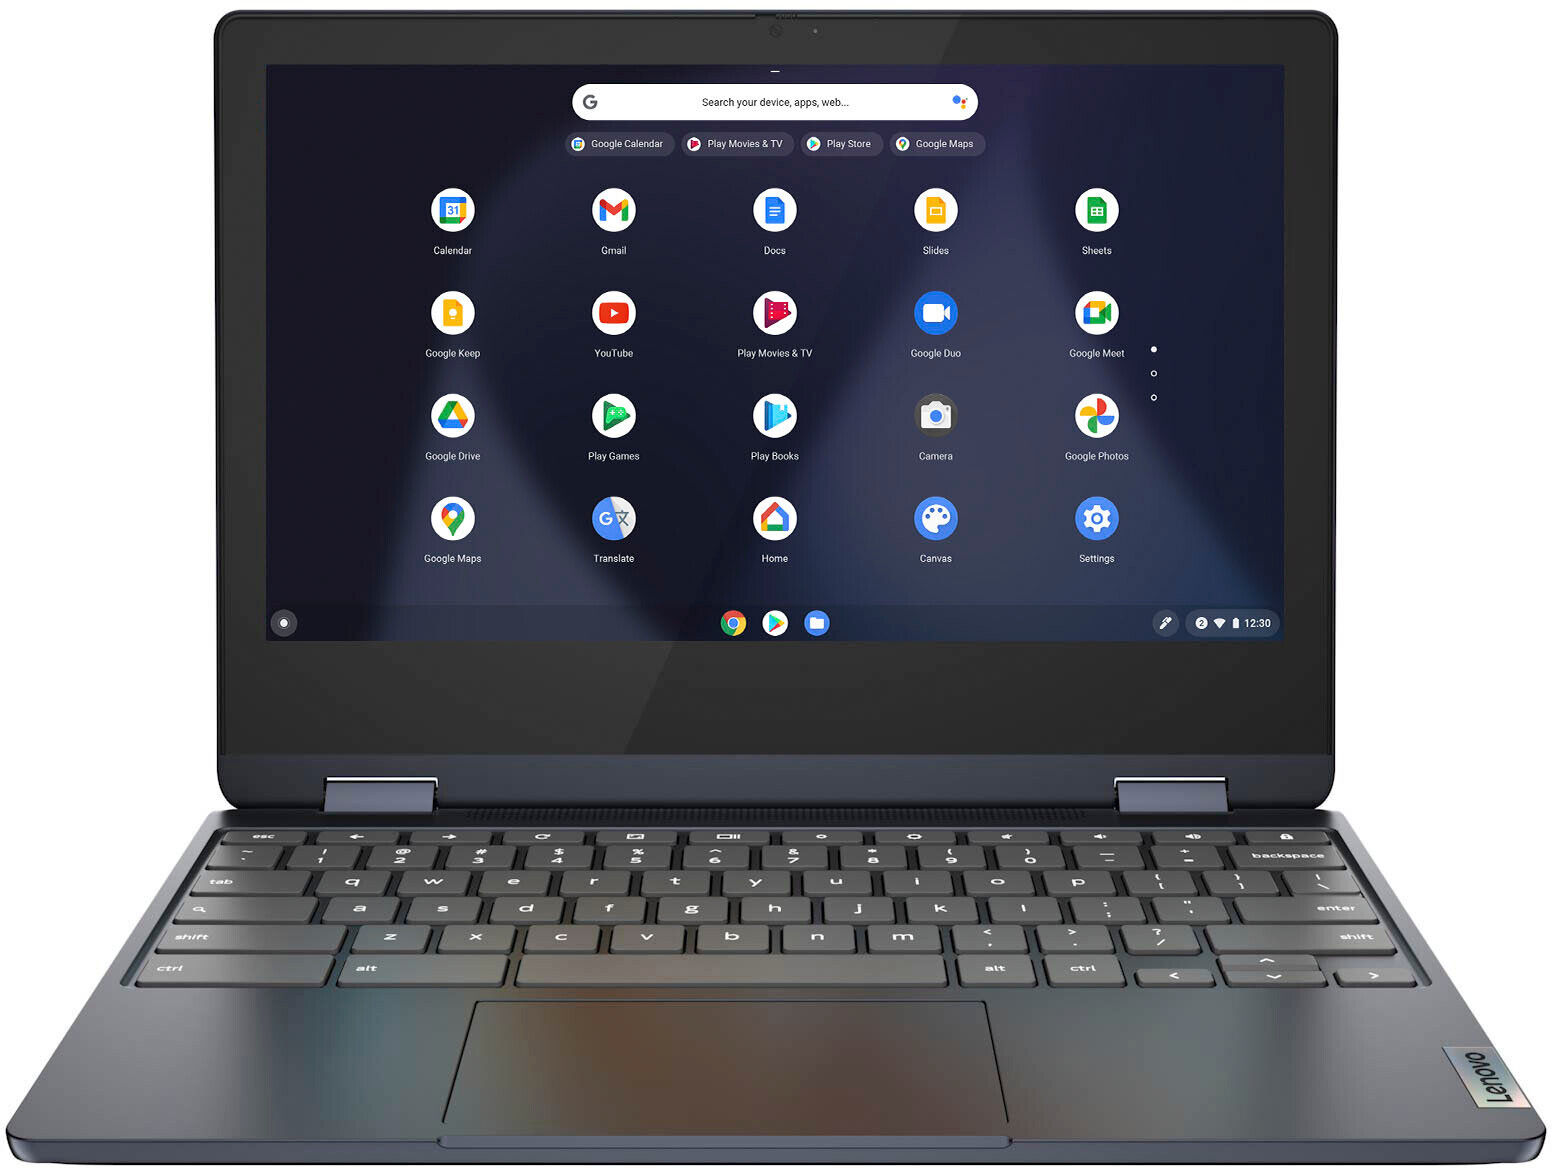 Lenovo - Flex 3 Chromebook 11.6" HD Touch-screen Laptop - Mediatek MT8183 - 4GB - 64GB eMMC - Abyss Blue $99